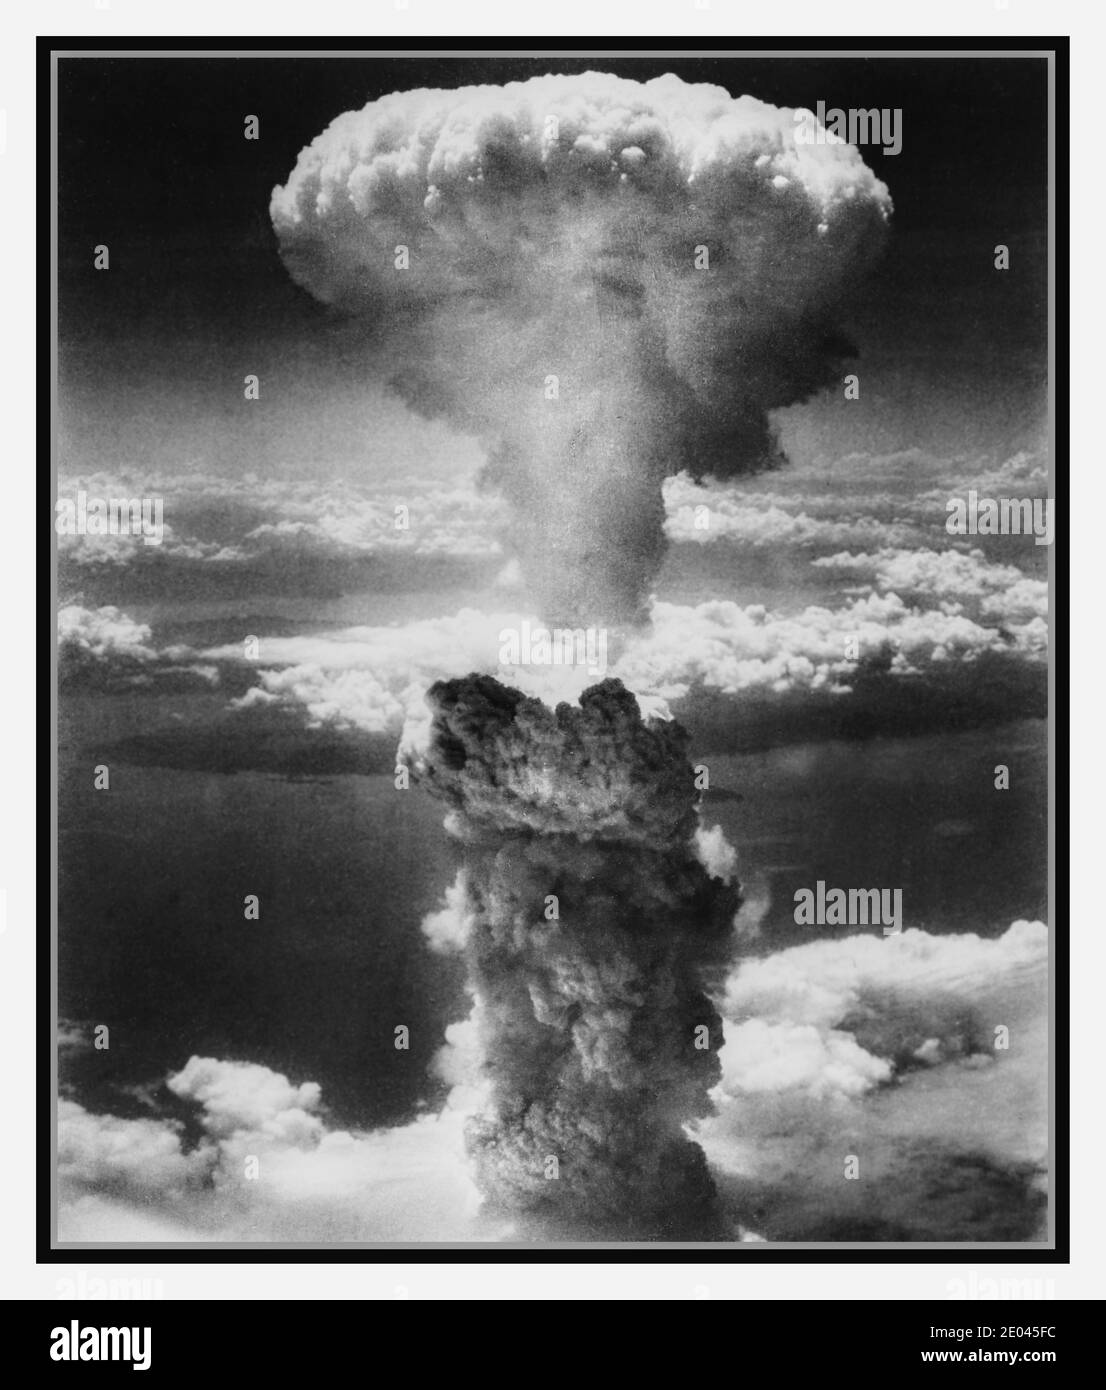 NAGASAKI ATOMIC BOMB WW2 American Atomic Bomb Mushroom Cloud Over Nagasaki, Japan under atomic bomb attack / U.S. Army A.A.F. photo. Photograph shows atomic bomb mushroom cloud over Nagasaki.United States. Army Air Forces, photographer Nagasaki, Japan], [9 August 1945] World War, 1939-1945--Air operations--Japan--Nagasaki-shi -  Mushroom clouds--Japan--Nagasaki-shi--1940-1950 -  Atomic bombs--Japan--Nagasaki-shi--1940-1950 Stock Photo